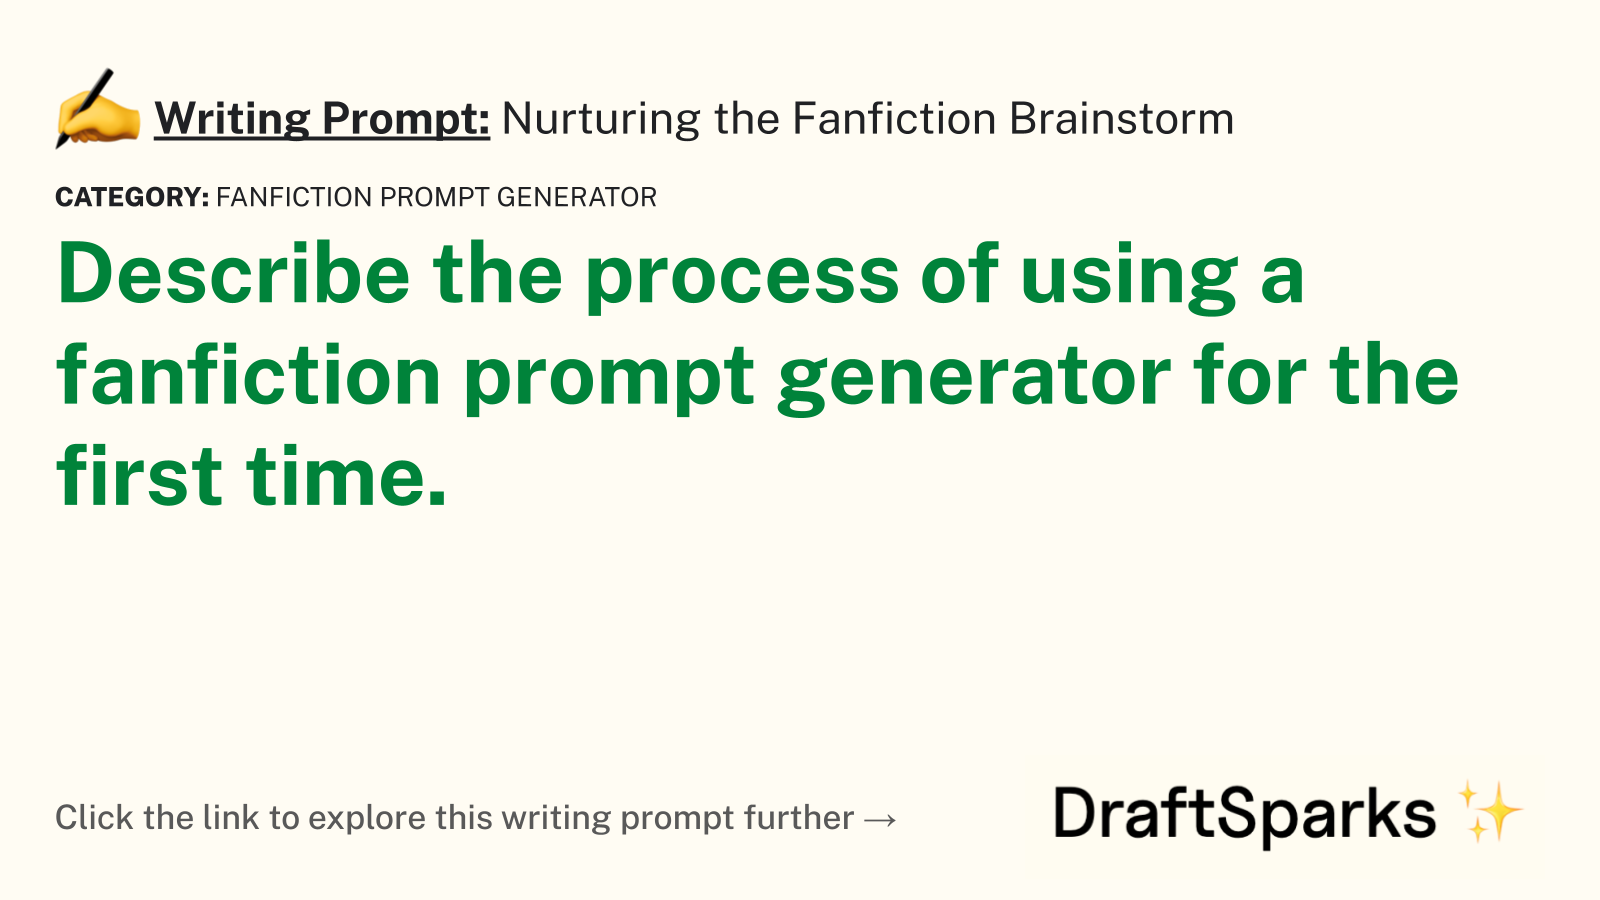 Nurturing the Fanfiction Brainstorm